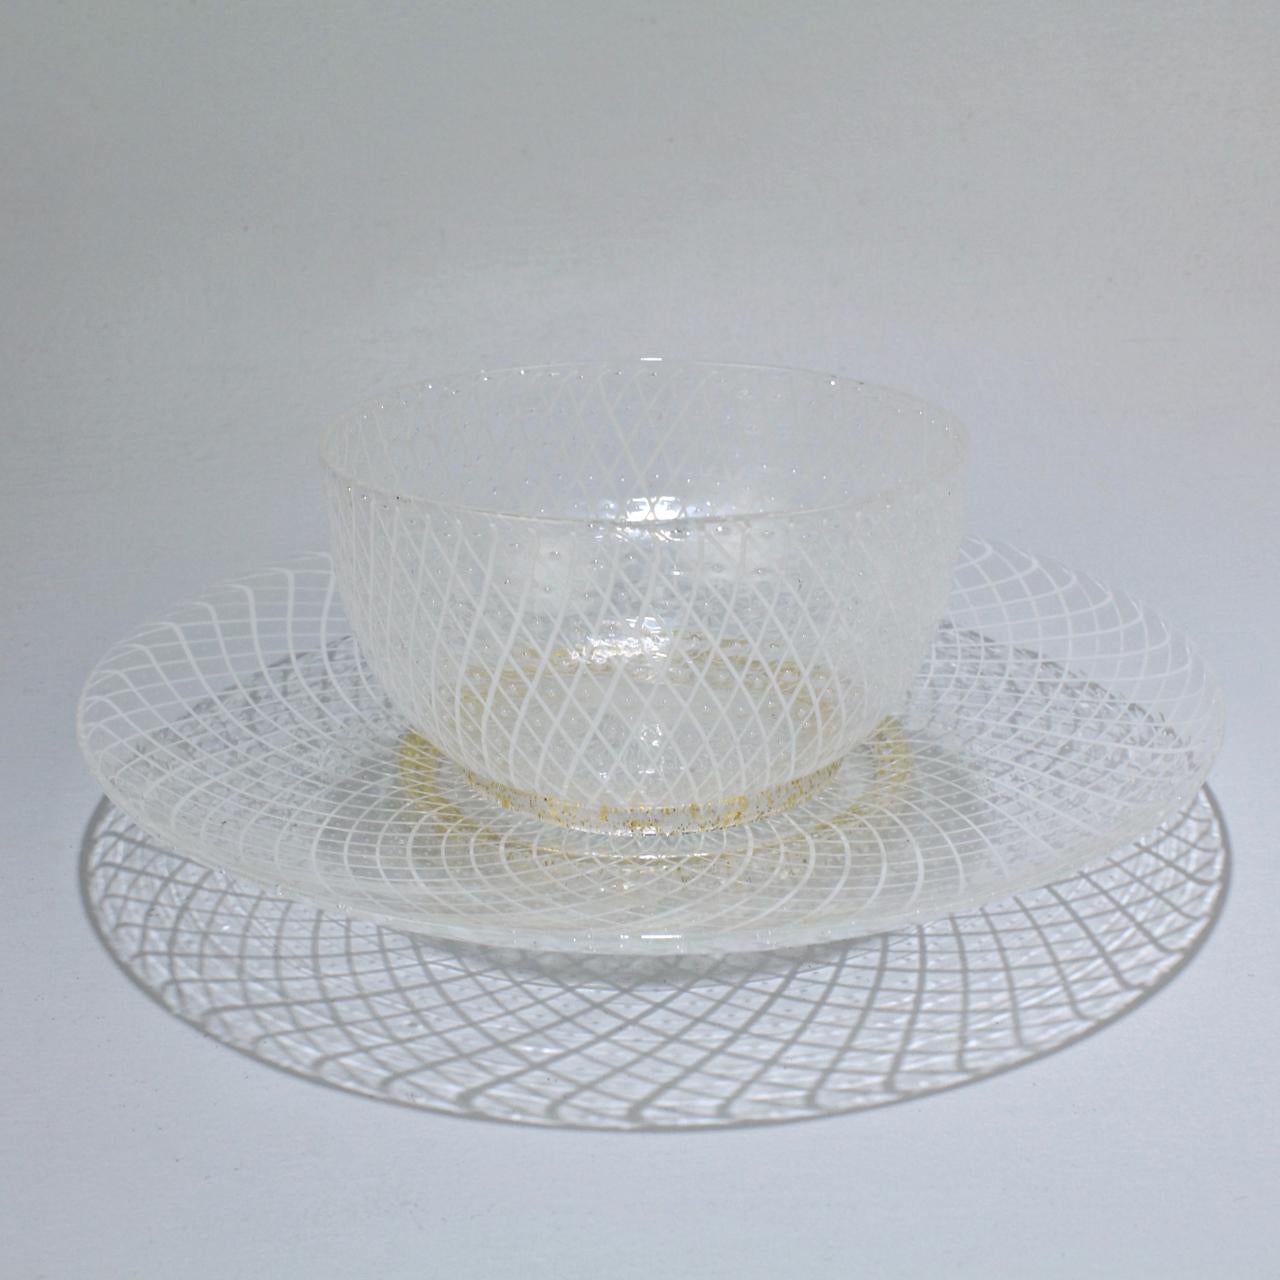 Set of 10 Venetian or Murano Glass Reticulo Filigrana Bowls and Plates 4